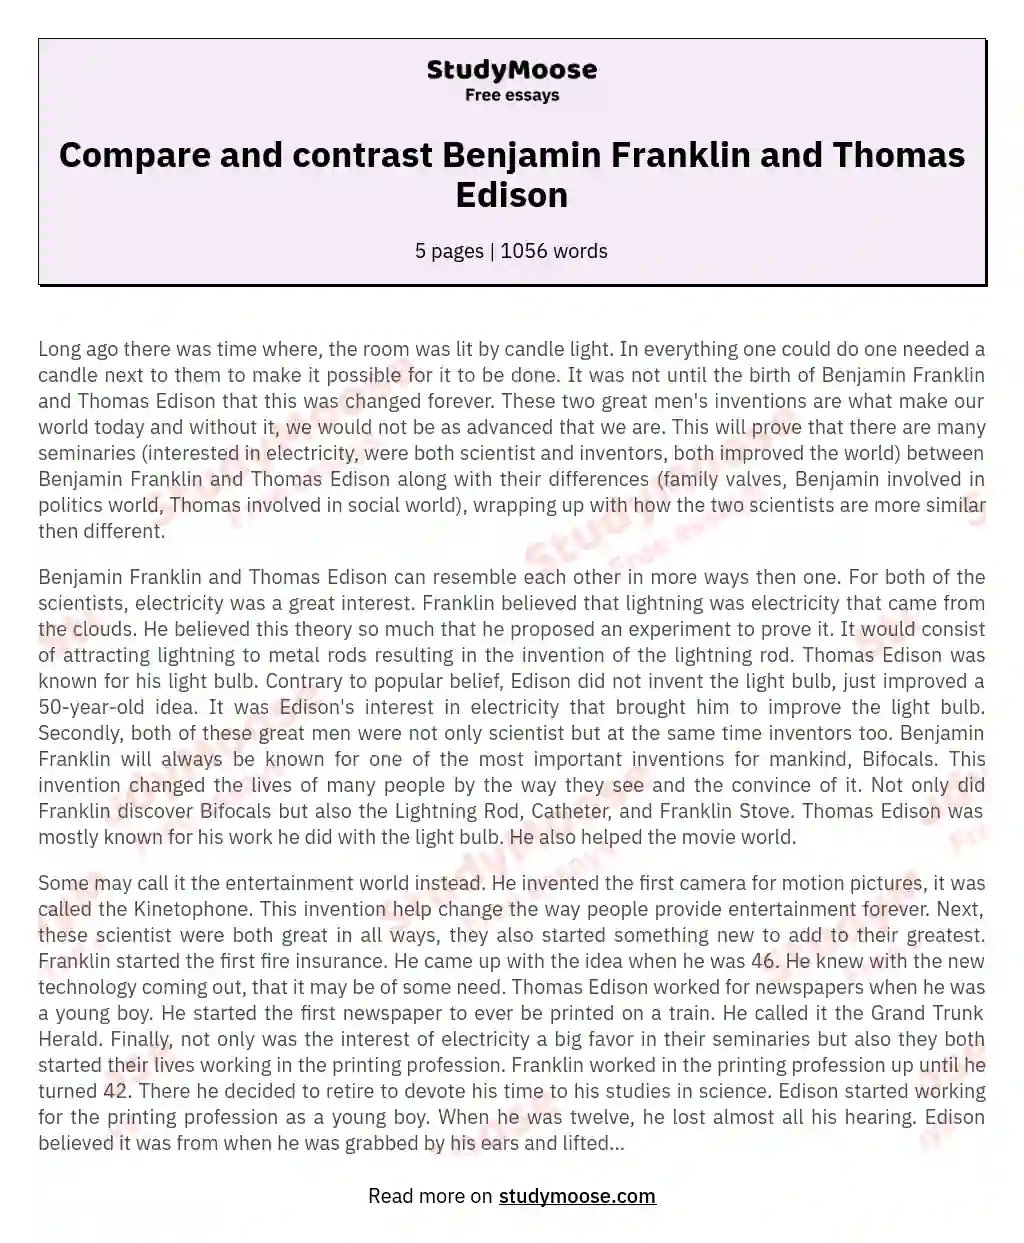 Compare and contrast Benjamin Franklin and Thomas Edison essay